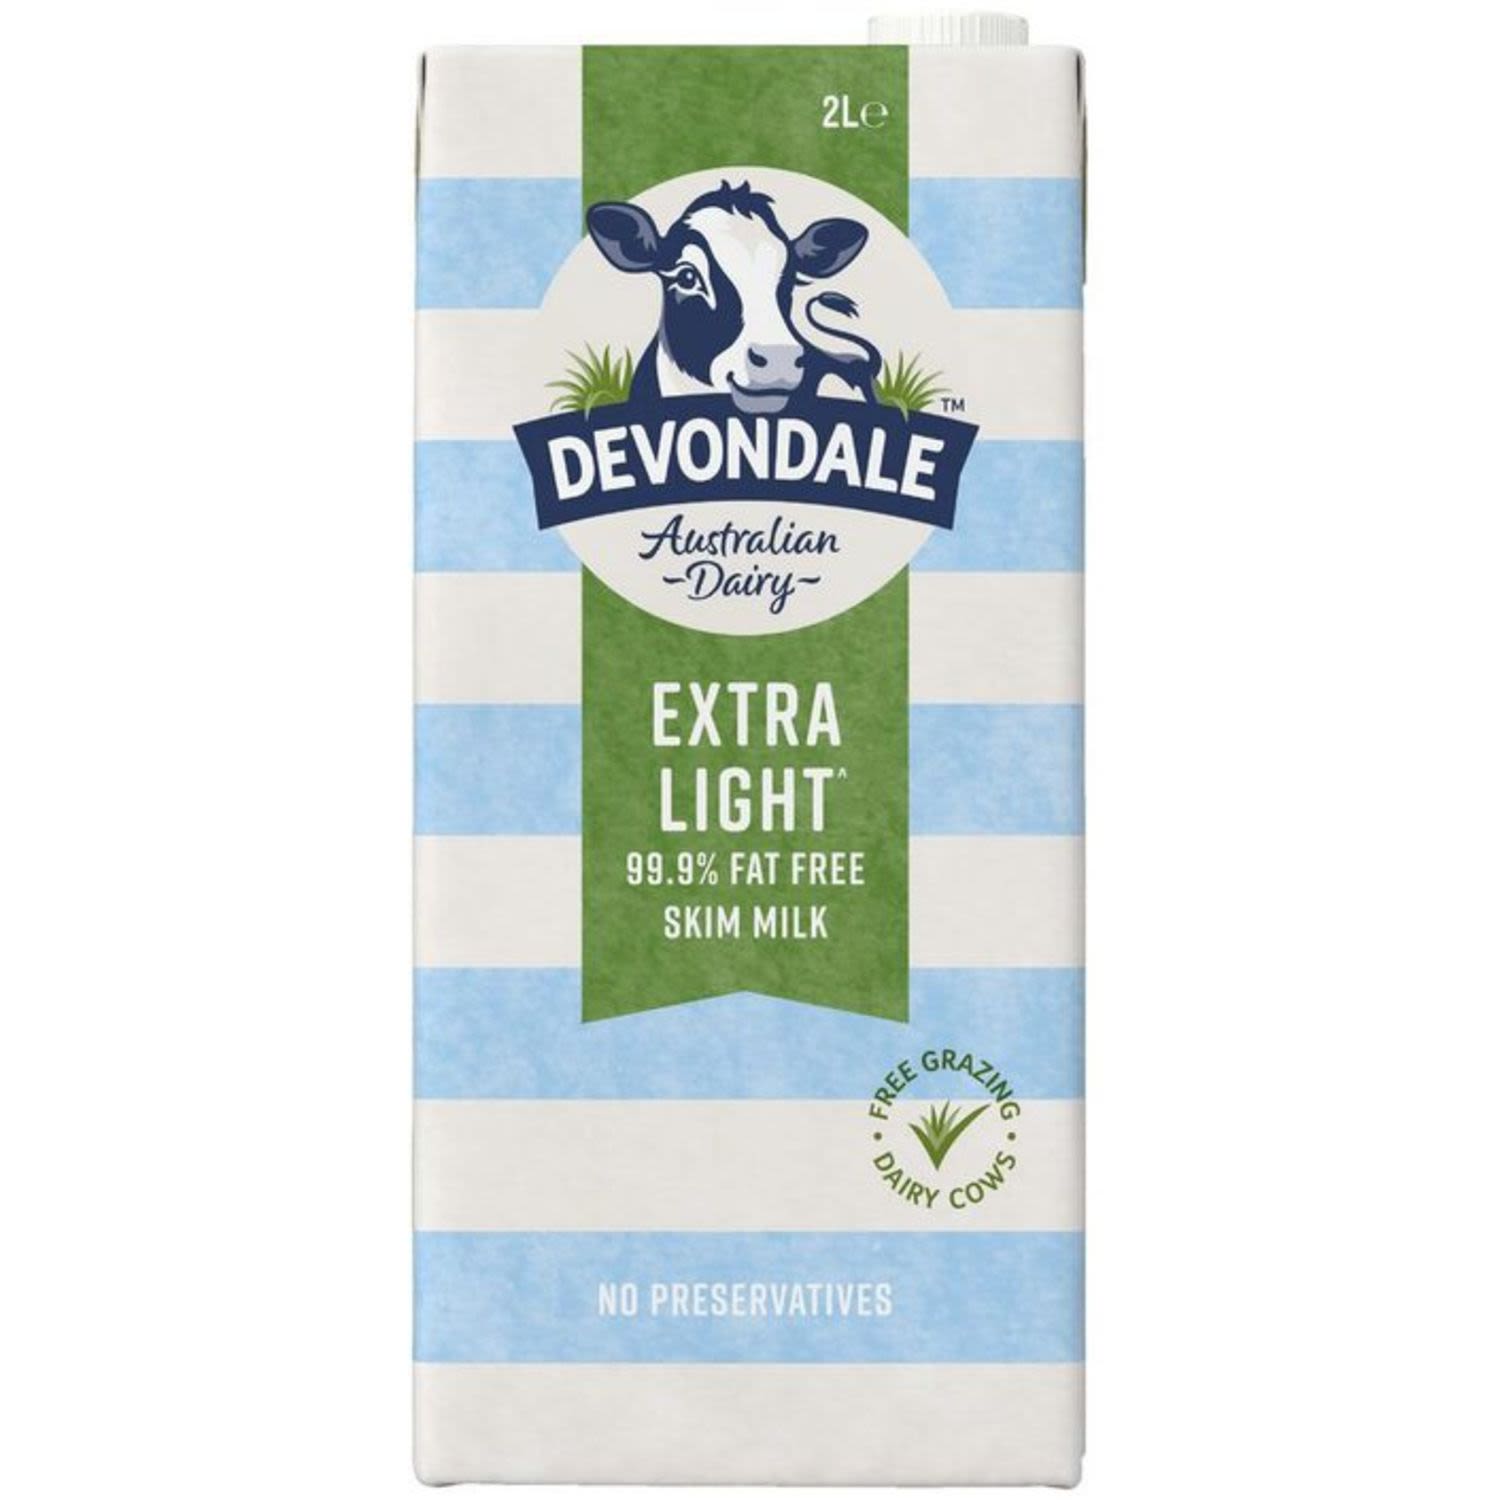 Devondale UHT Skim Milk, 2 Litre